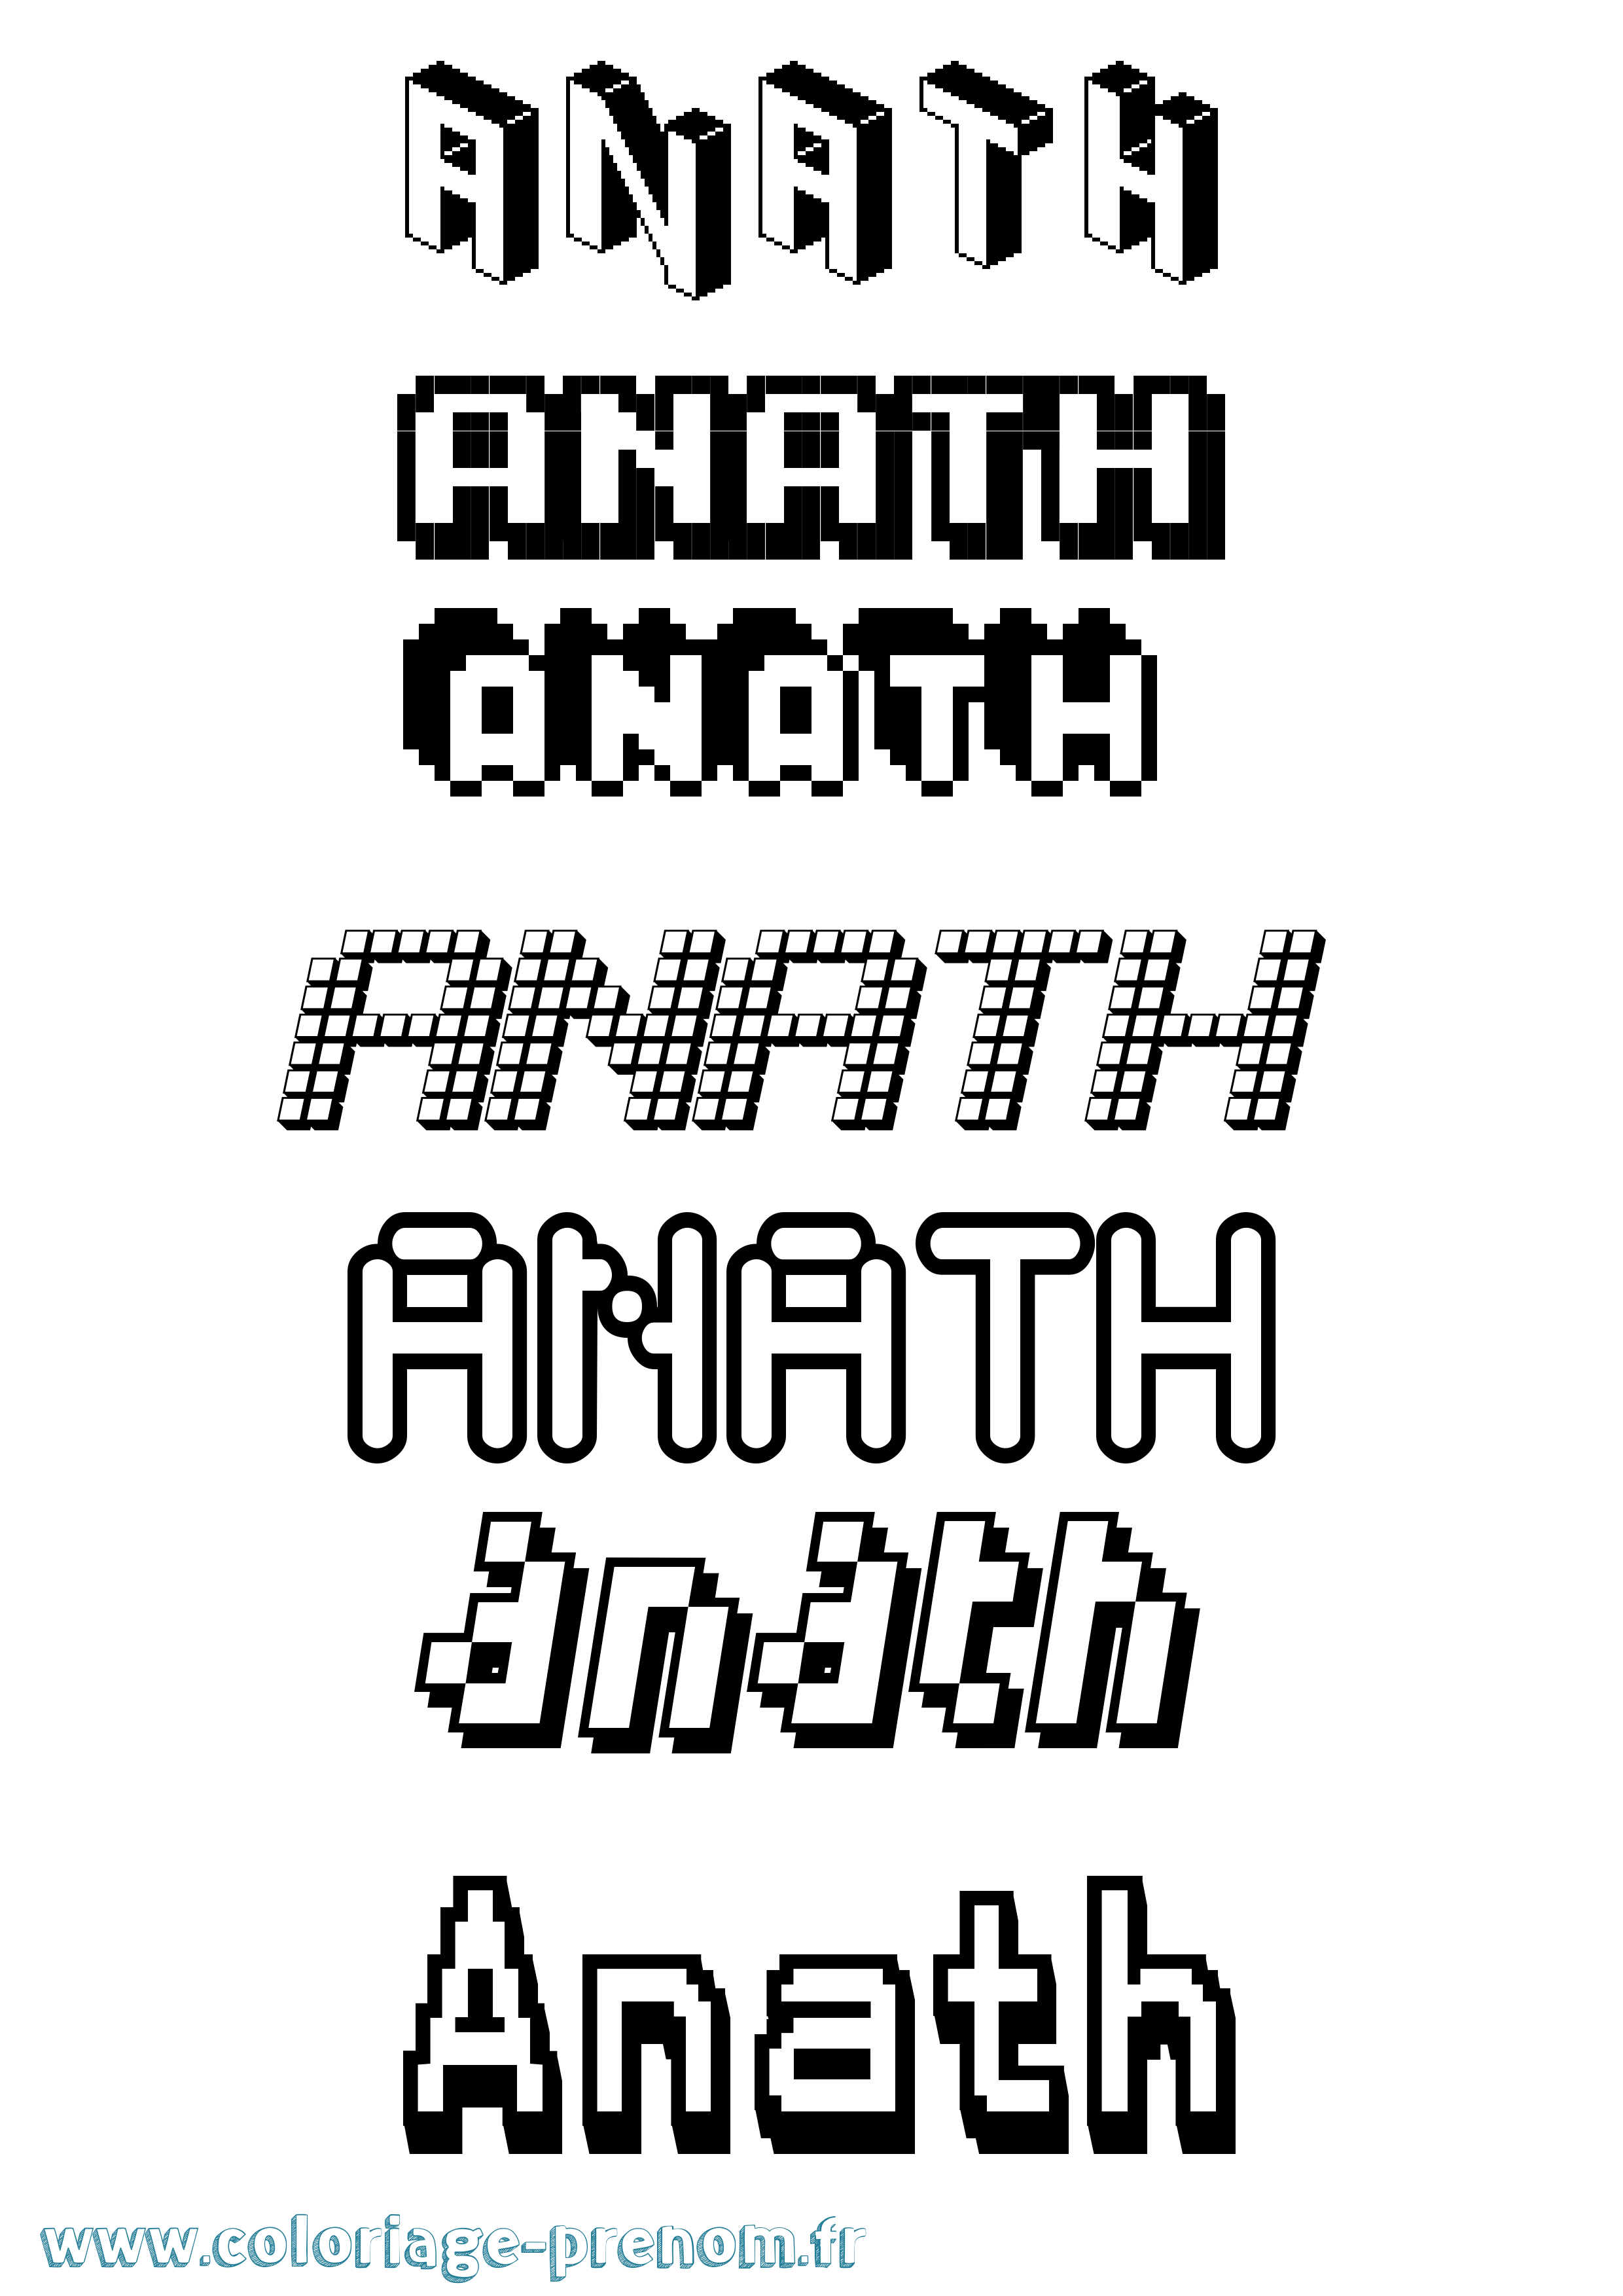 Coloriage prénom Anath Pixel